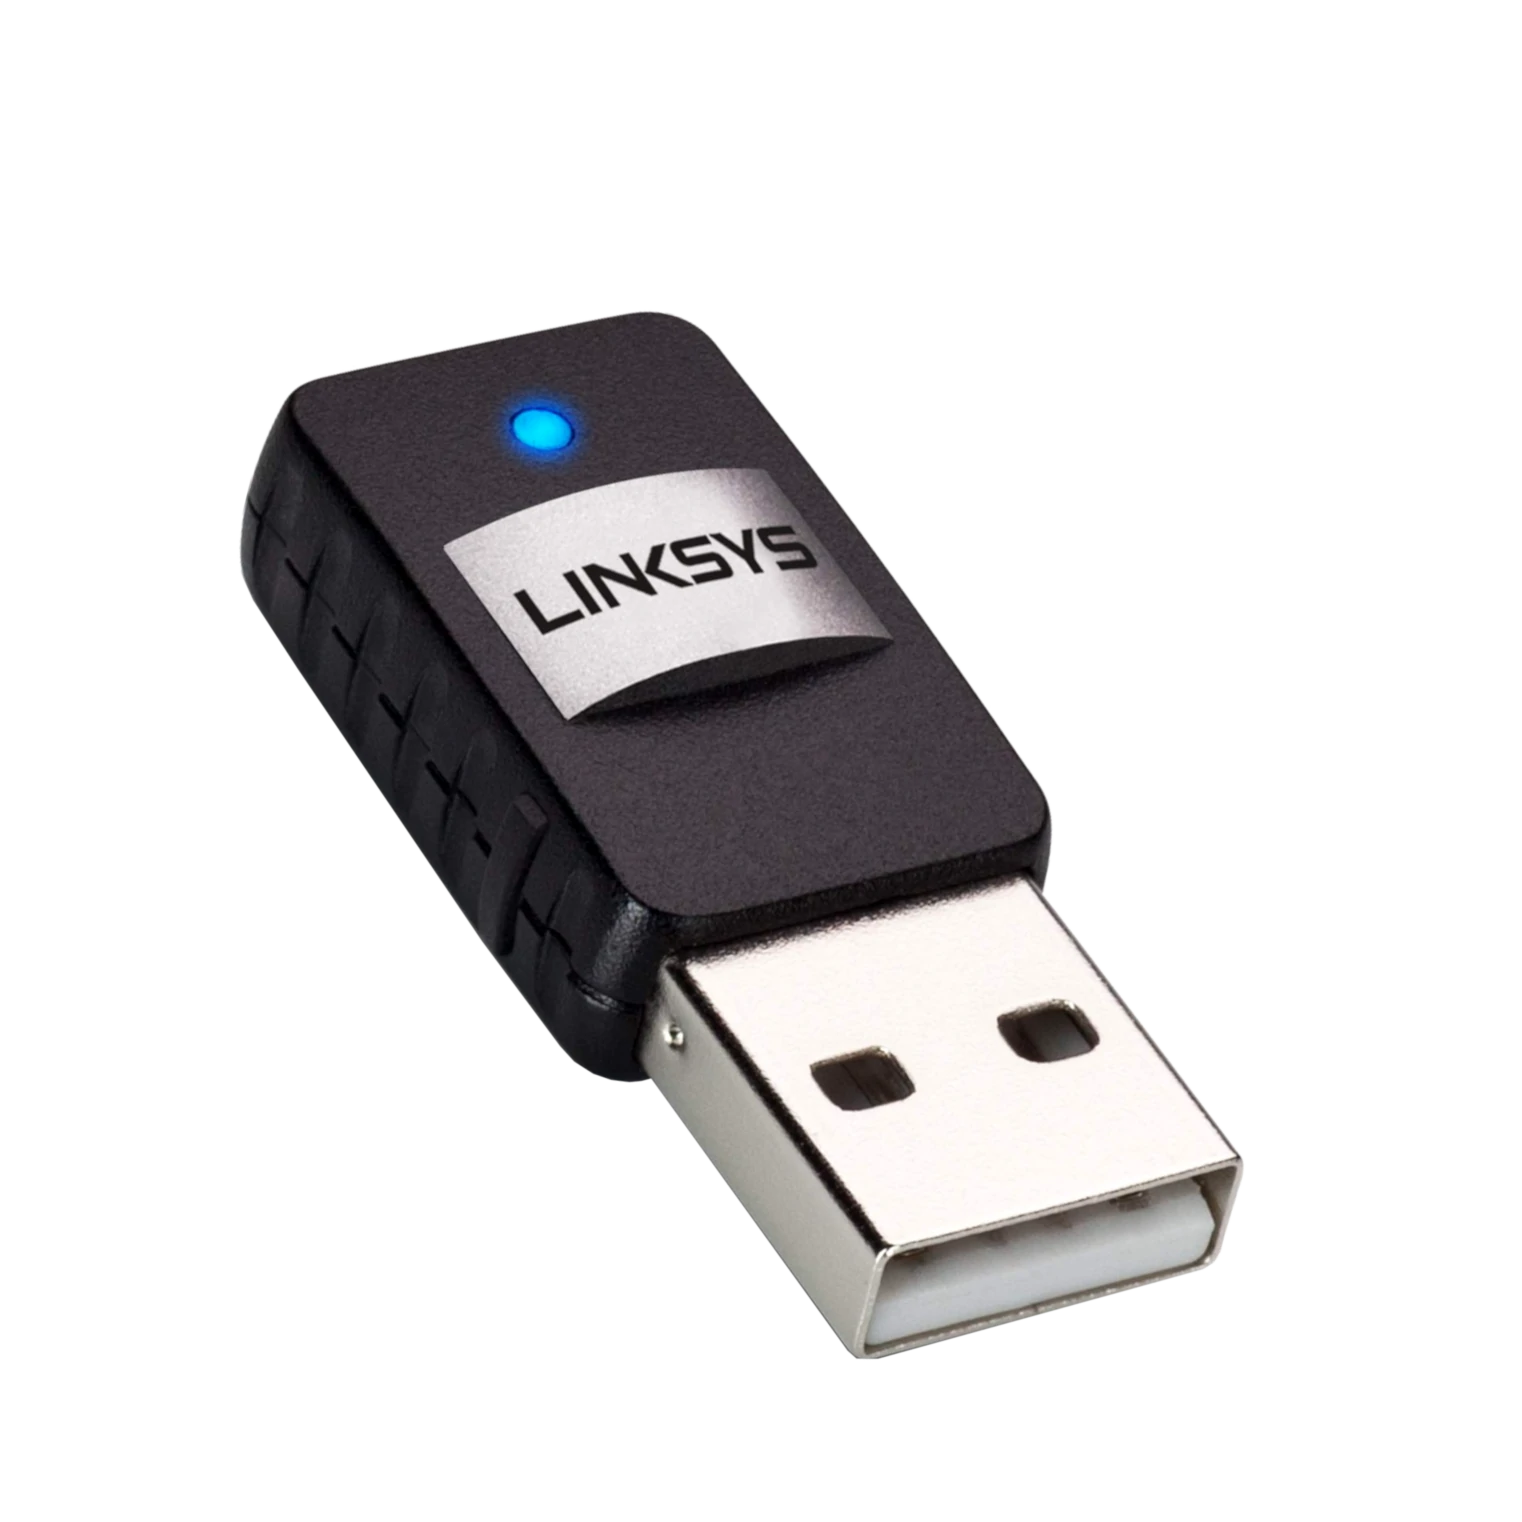 Linksys Wireless-AC Mini USB Device Drivers